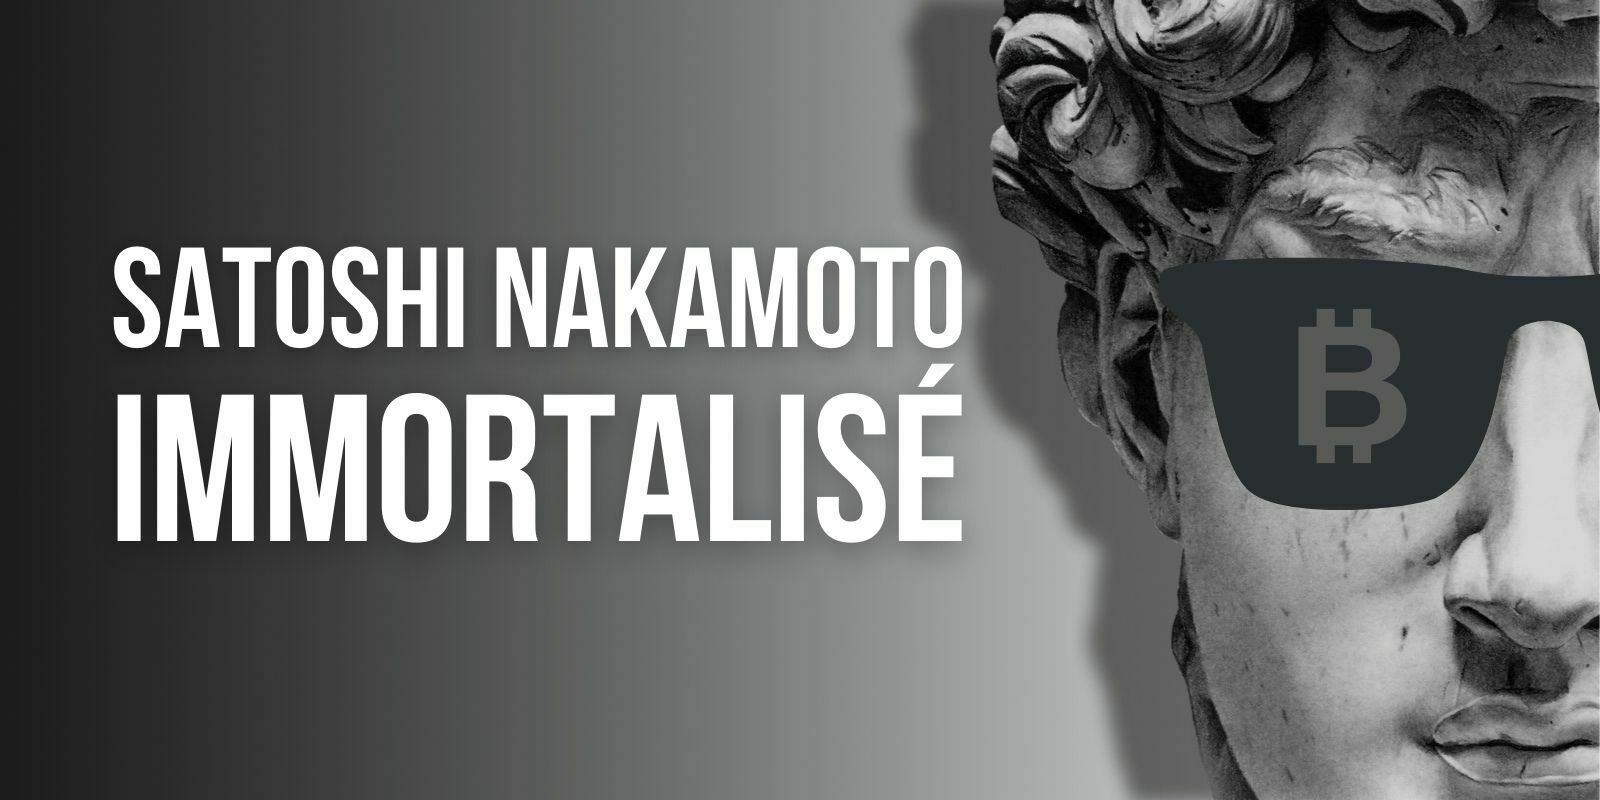 Une statue représentant Satoshi Nakamoto va être érigée à Budapest